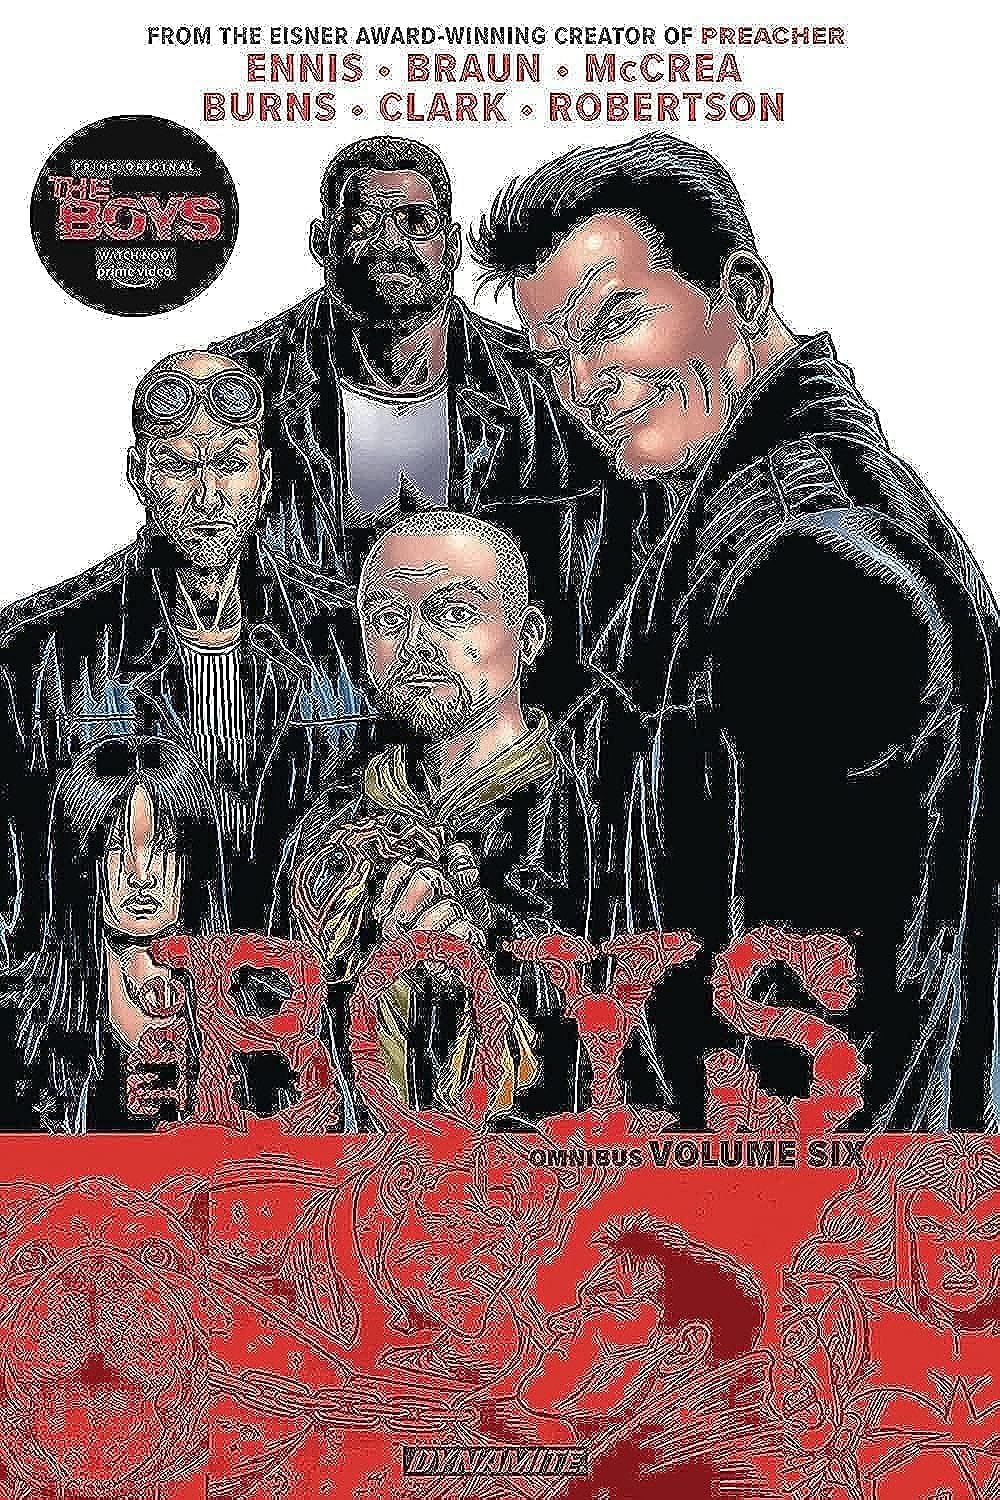 The Boys Omnibus Vol. 6